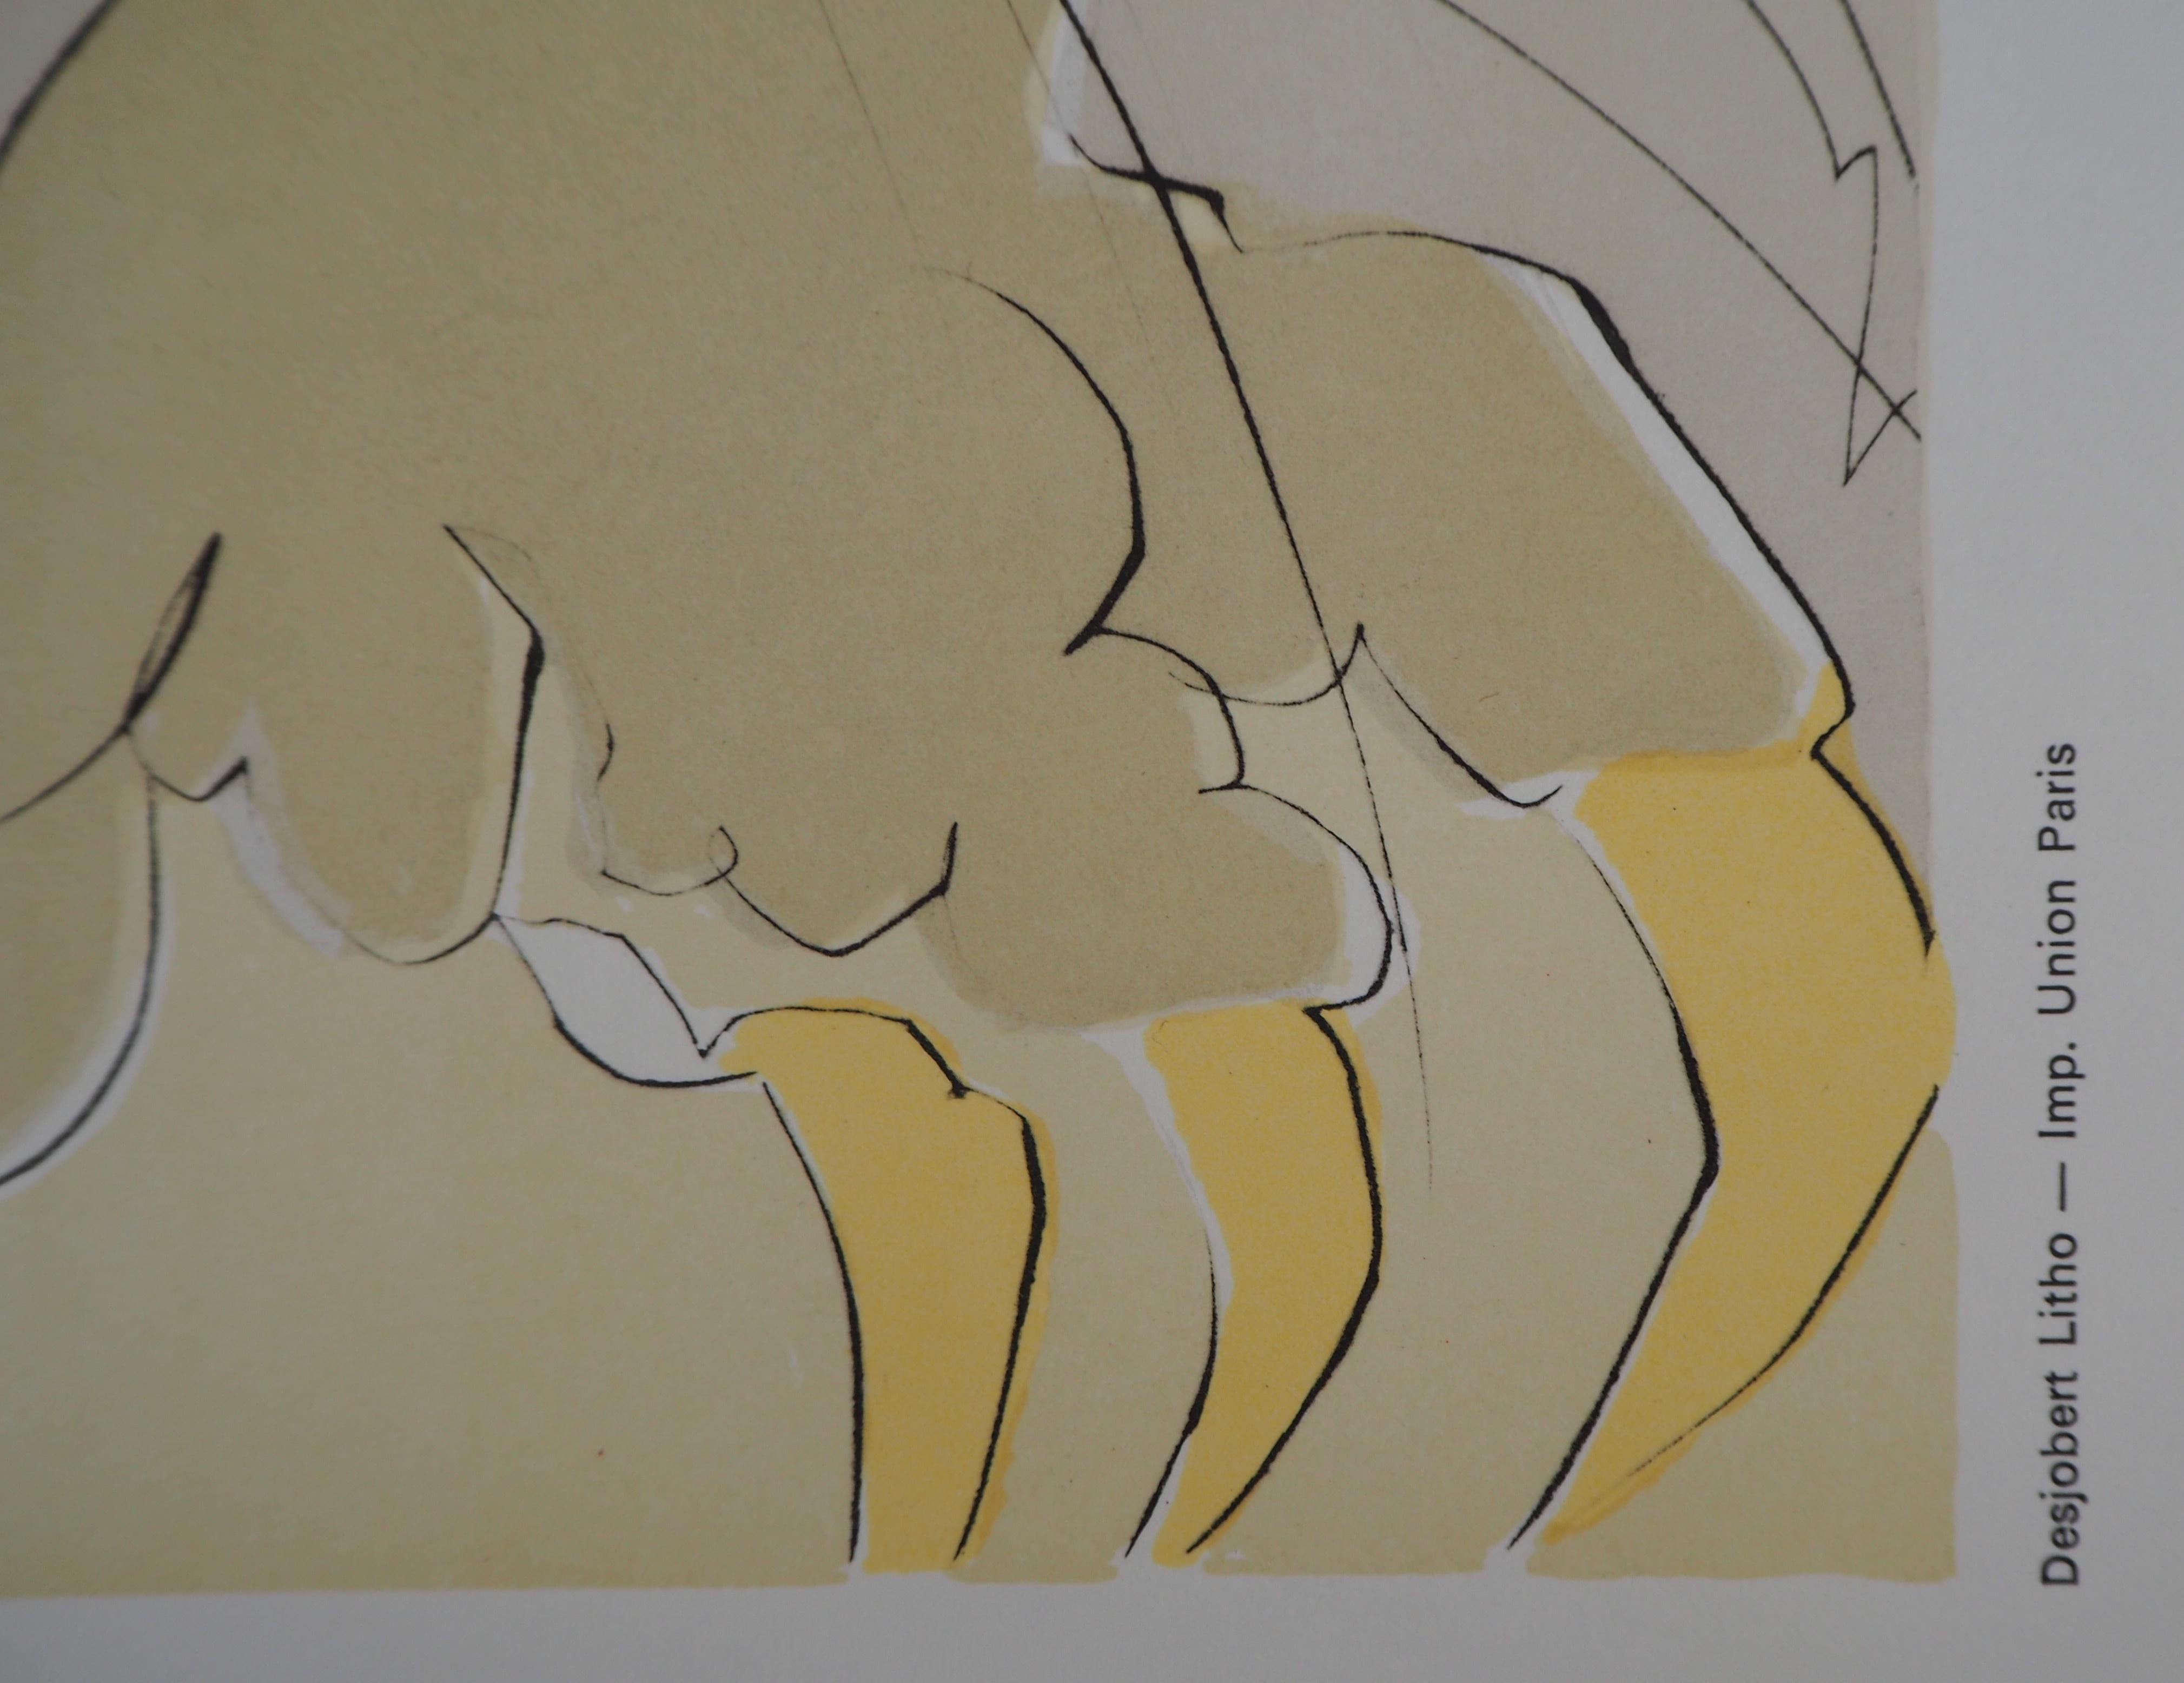 Les Caprices de Goya - Lithograph Poster (Field #77-3) - Beige Figurative Print by (after) Salvador Dali